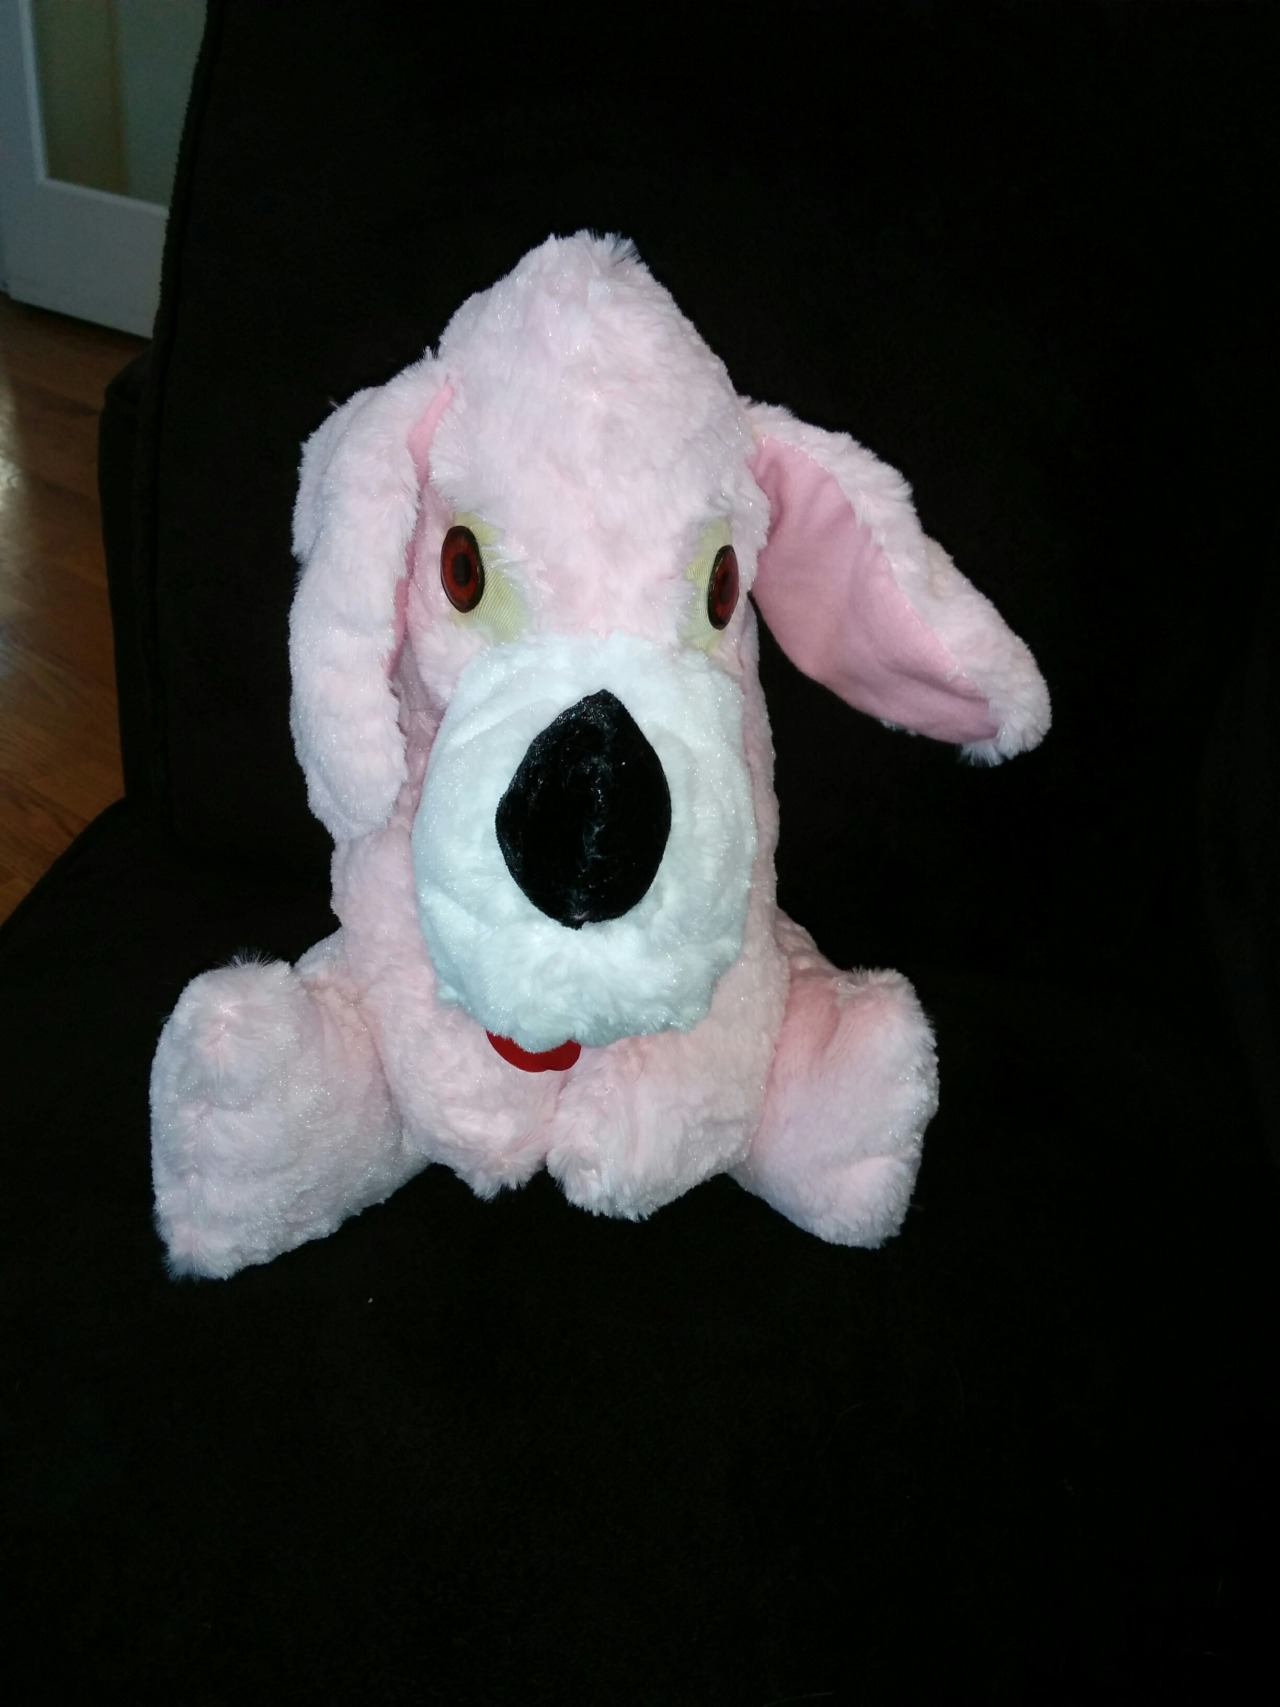 morgan dog stuffed animal